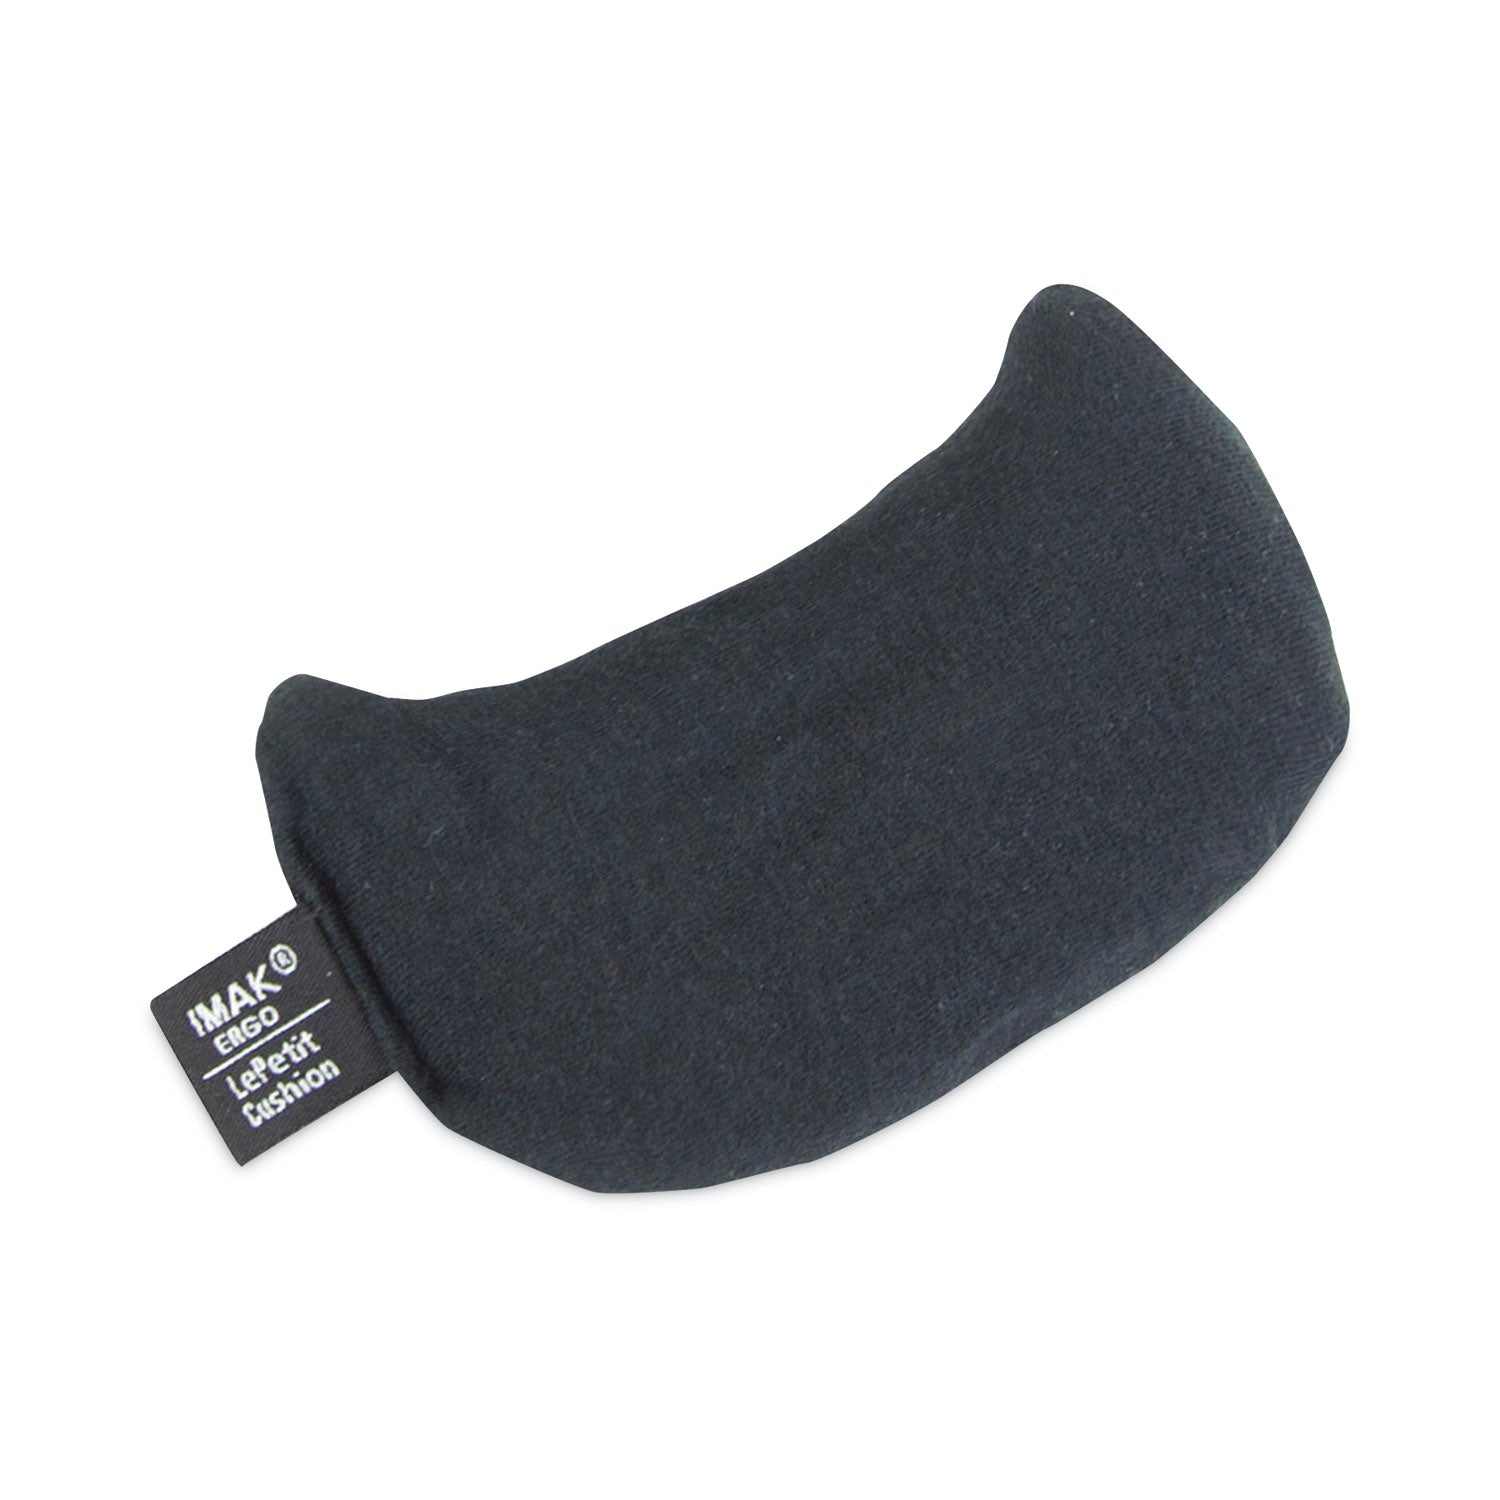 Le Petit Mouse Wrist Cushion, 4.25 x 2.5, Black - 